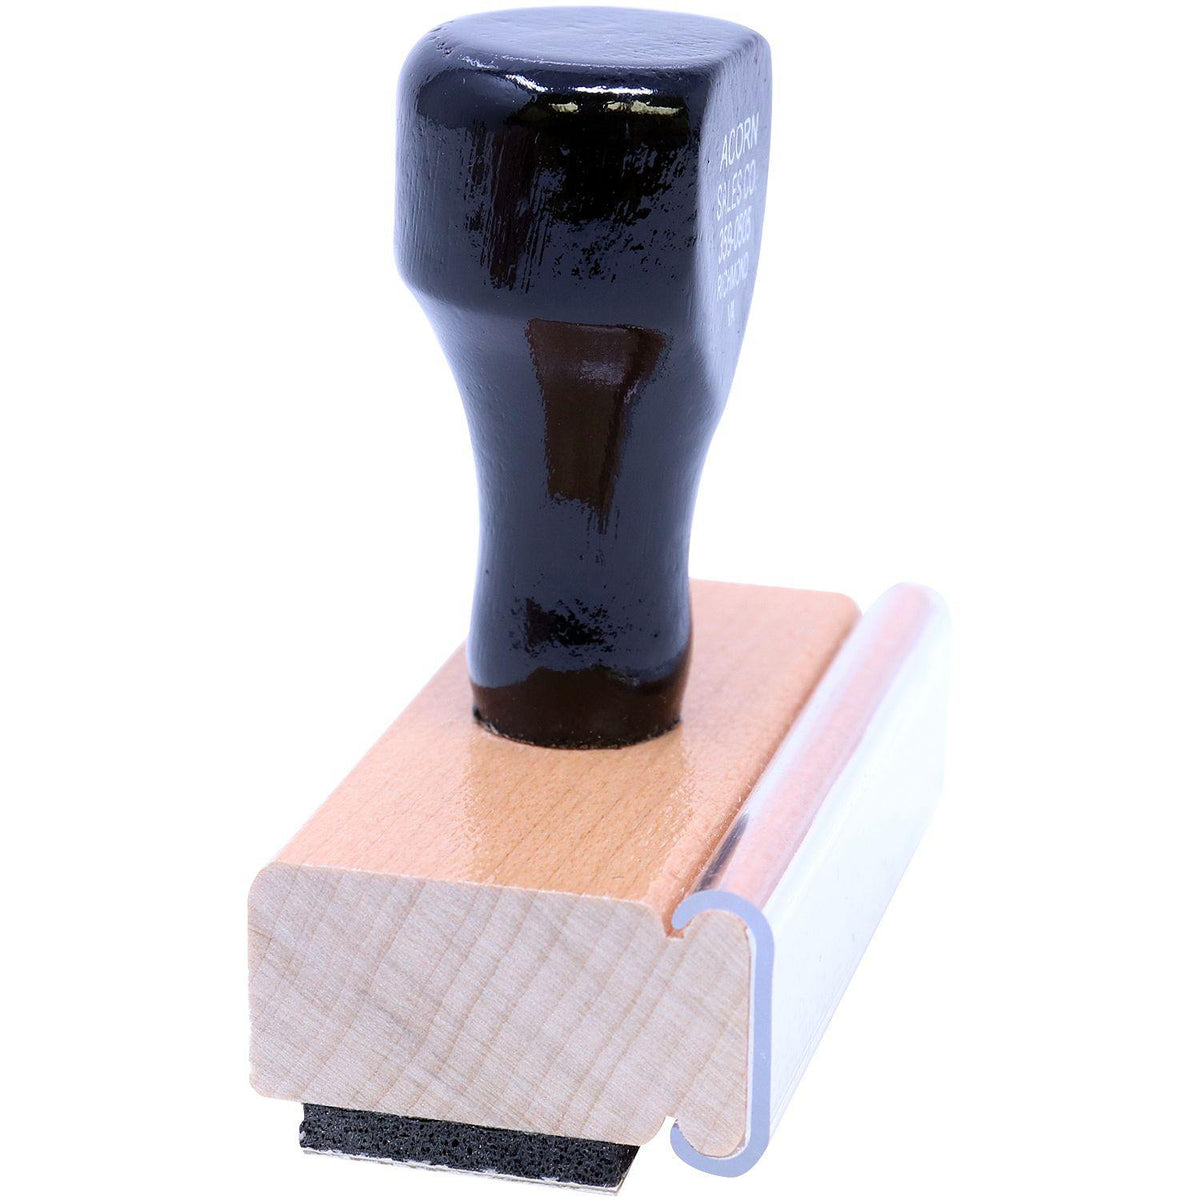 Large Super Rubber Stamp - Engineer Seal Stamps - Brand_Acorn, Impression Size_Large, Stamp Type_Regular Stamp, Type of Use_Teacher